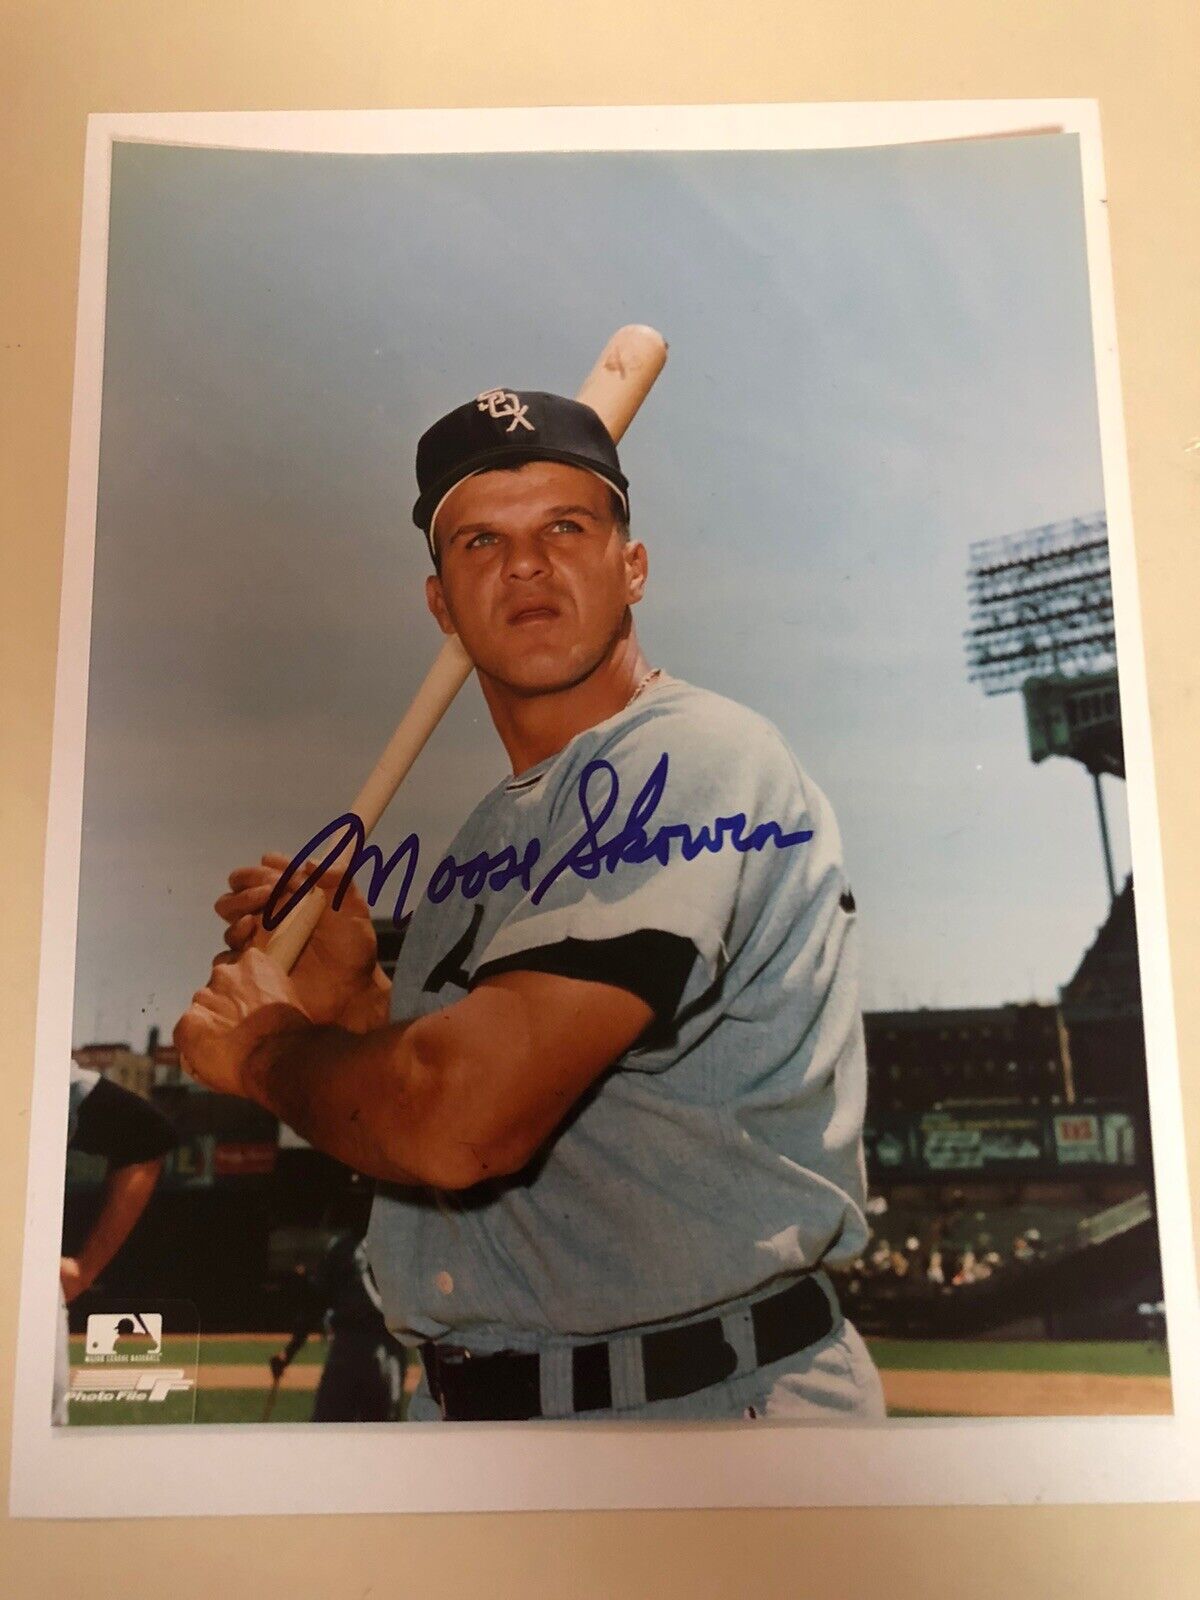 Moose Skowron New York Yankees Signed Auto 8x10 Photo Autograph No COA